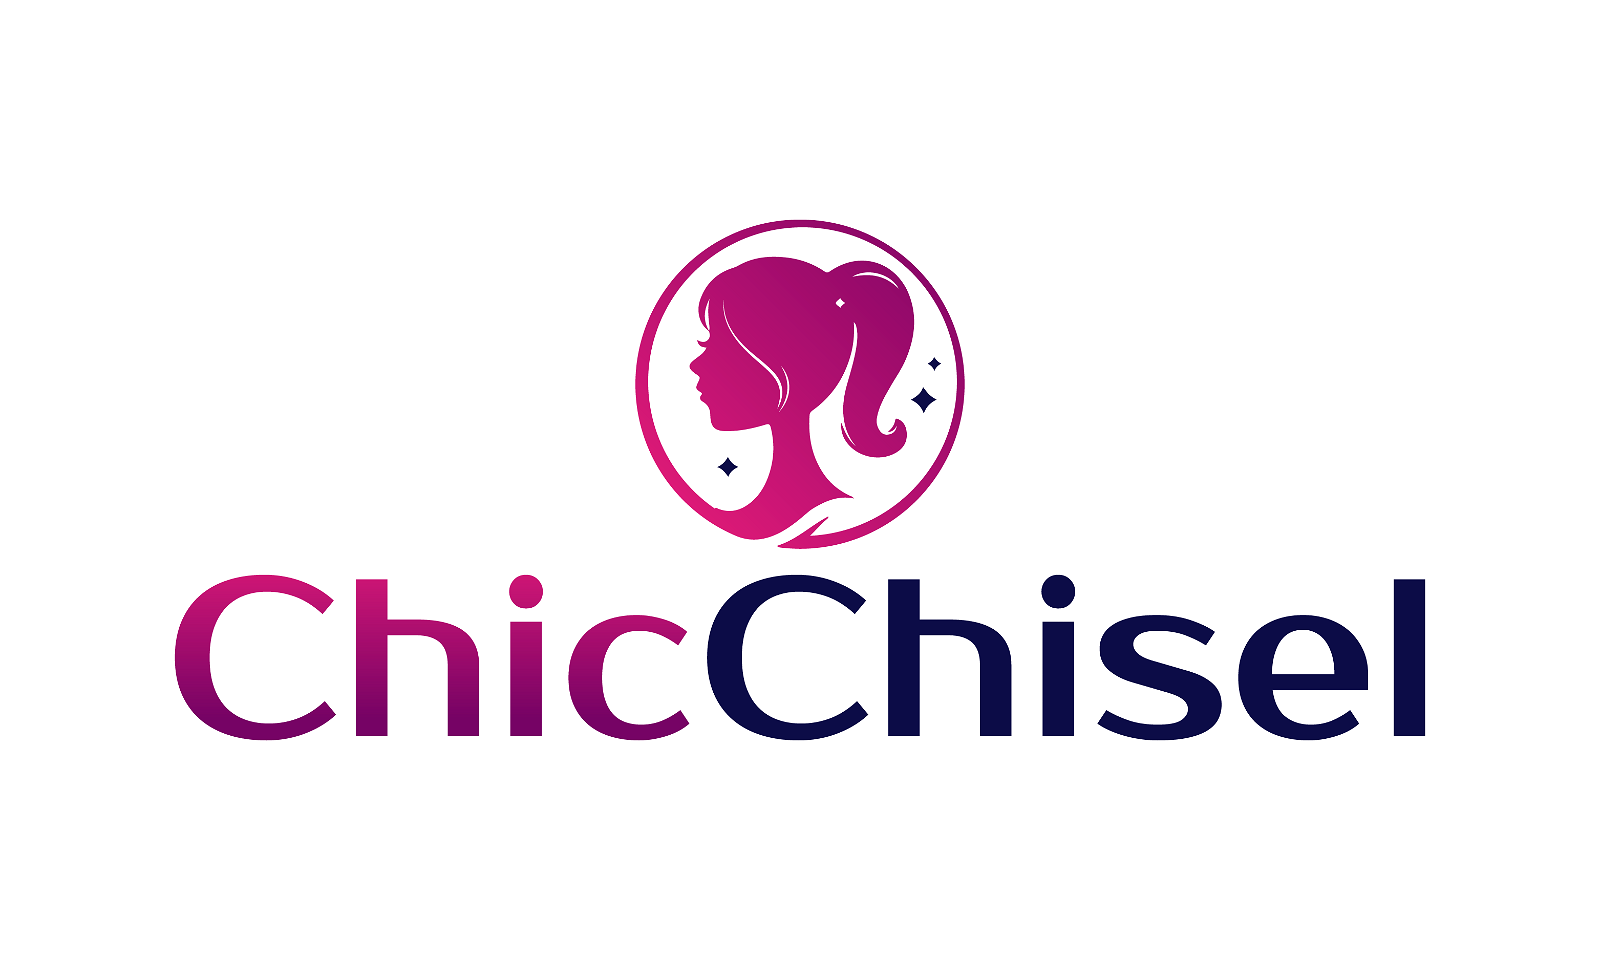 ChicChisel.com - Creative brandable domain for sale